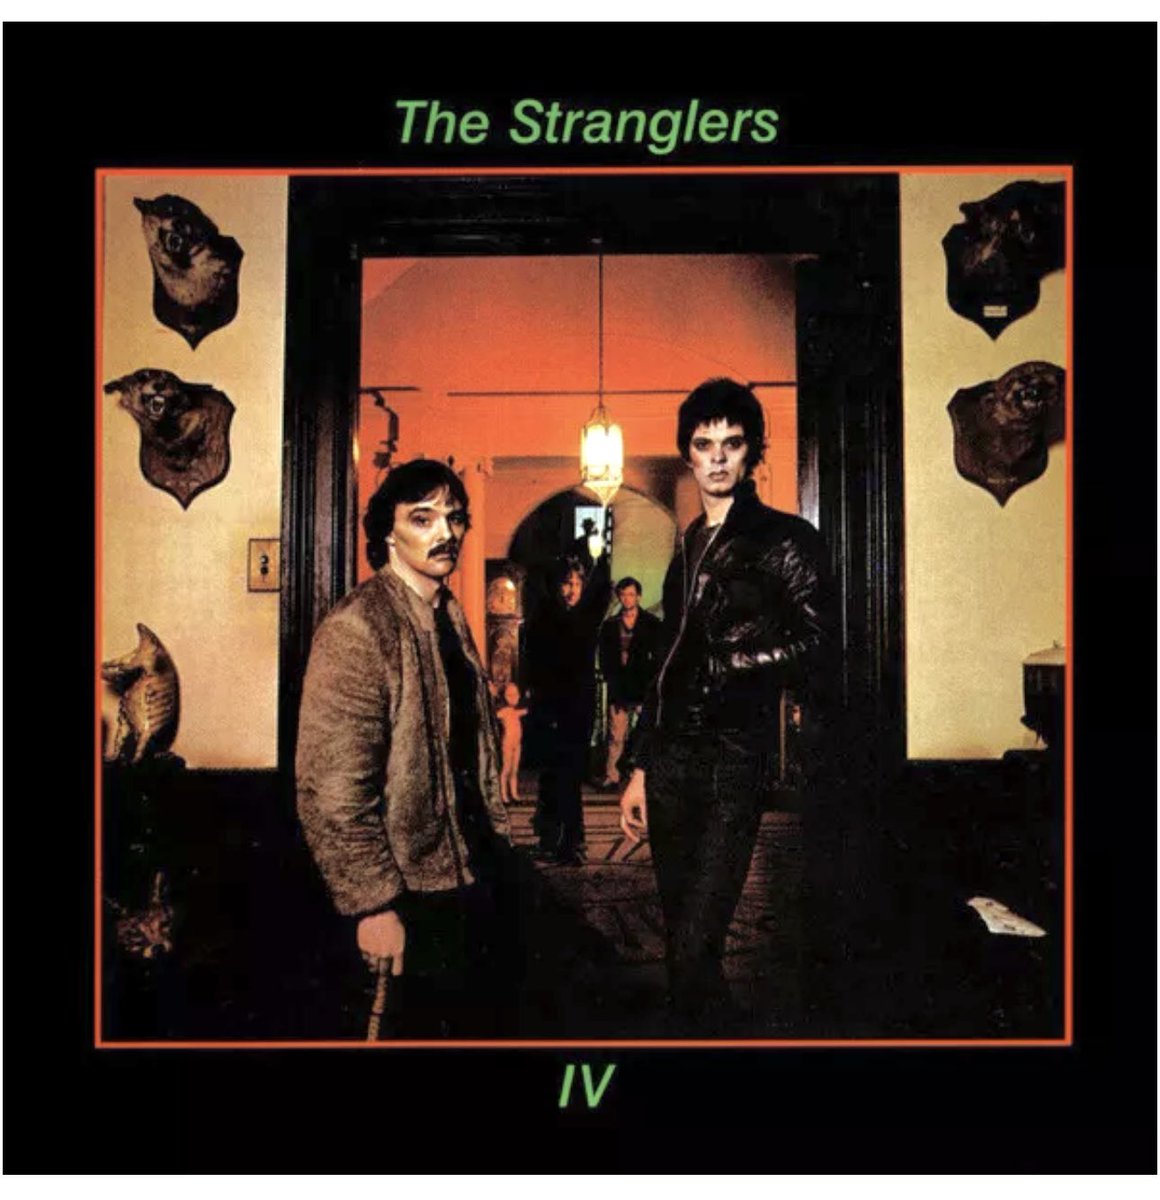 The Stranglers 
Rattus Norvegicus (IV)

15 April 1977

@NewWaveAndPunk #thestranglers #punk #music #vinyl #70s #vinylrecords #vinylcommunity